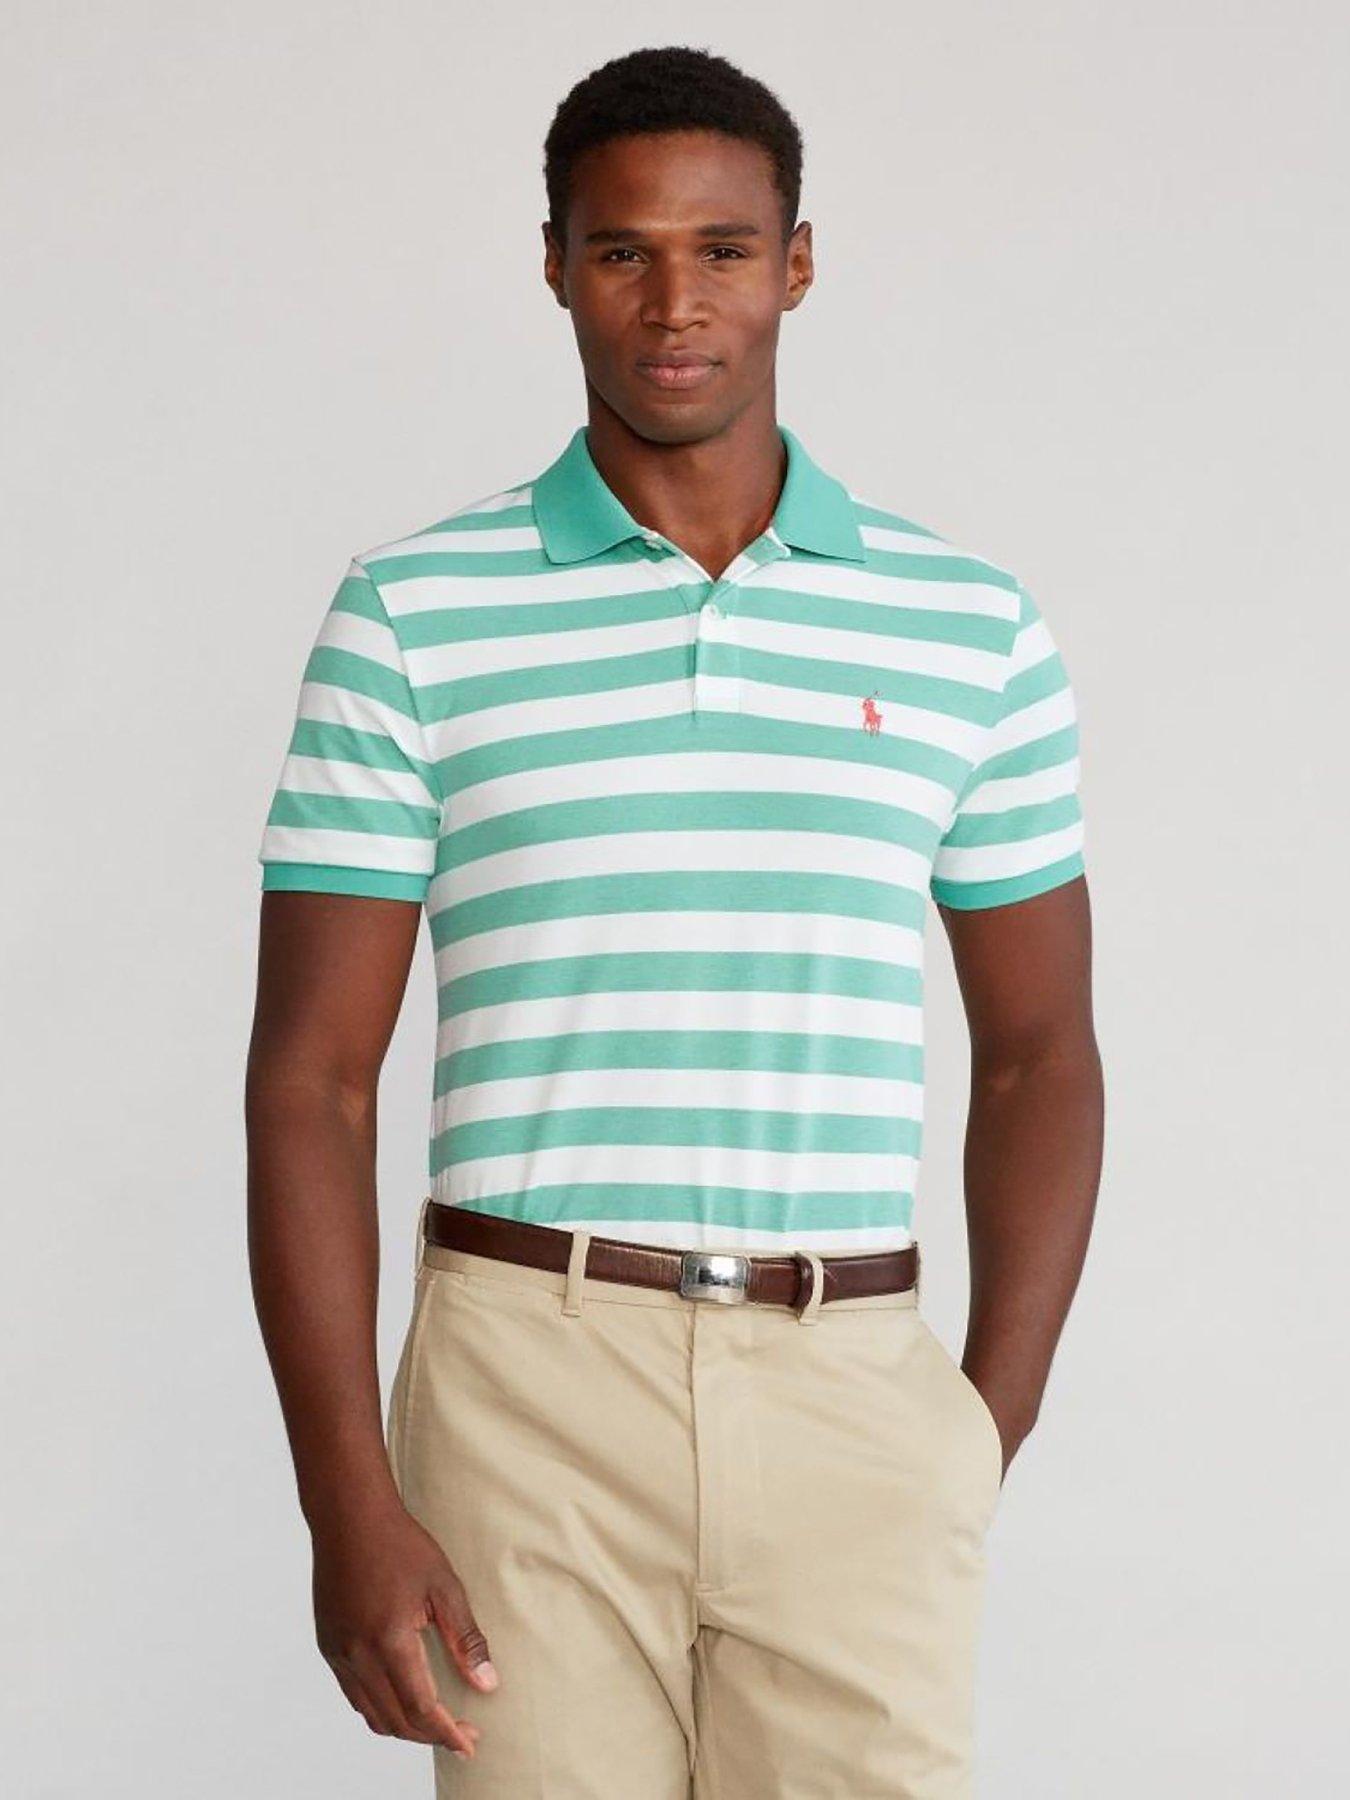 Ralph Lauren Golf Short Sleeve Yd Pique Polo - Green/White 